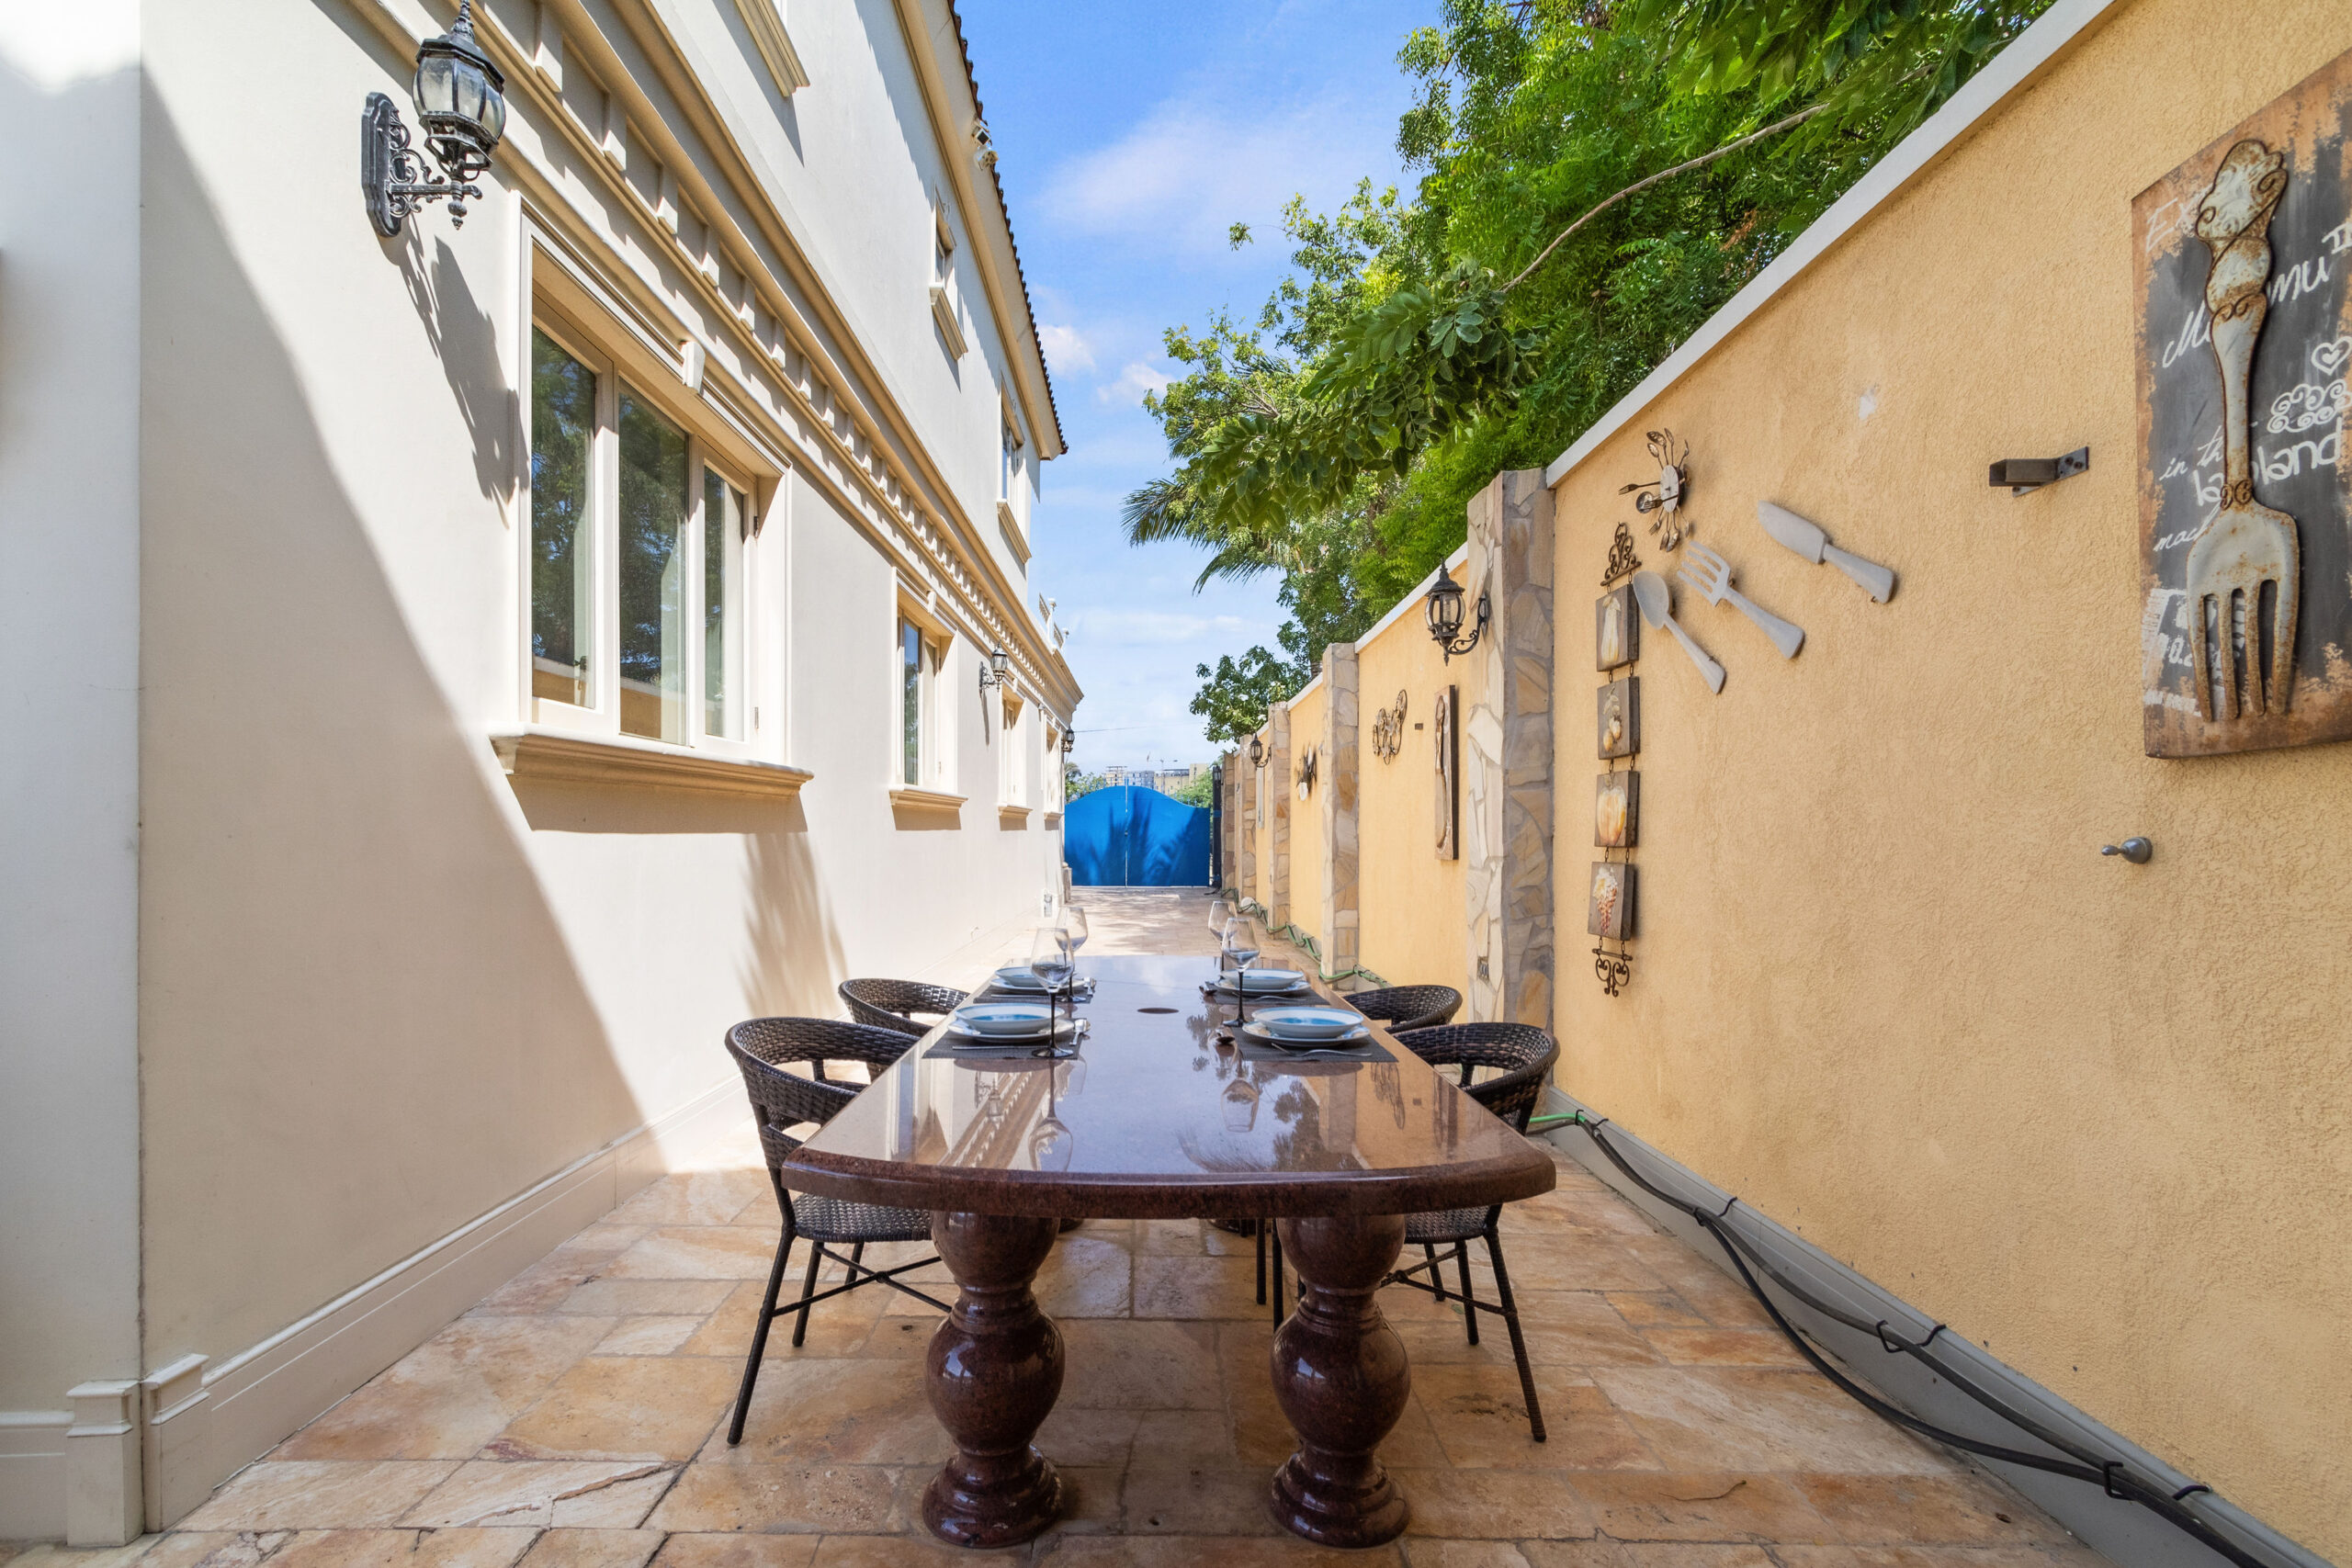 Elegant dining area at La Casa Piu Bella, Aruba's premier estate.